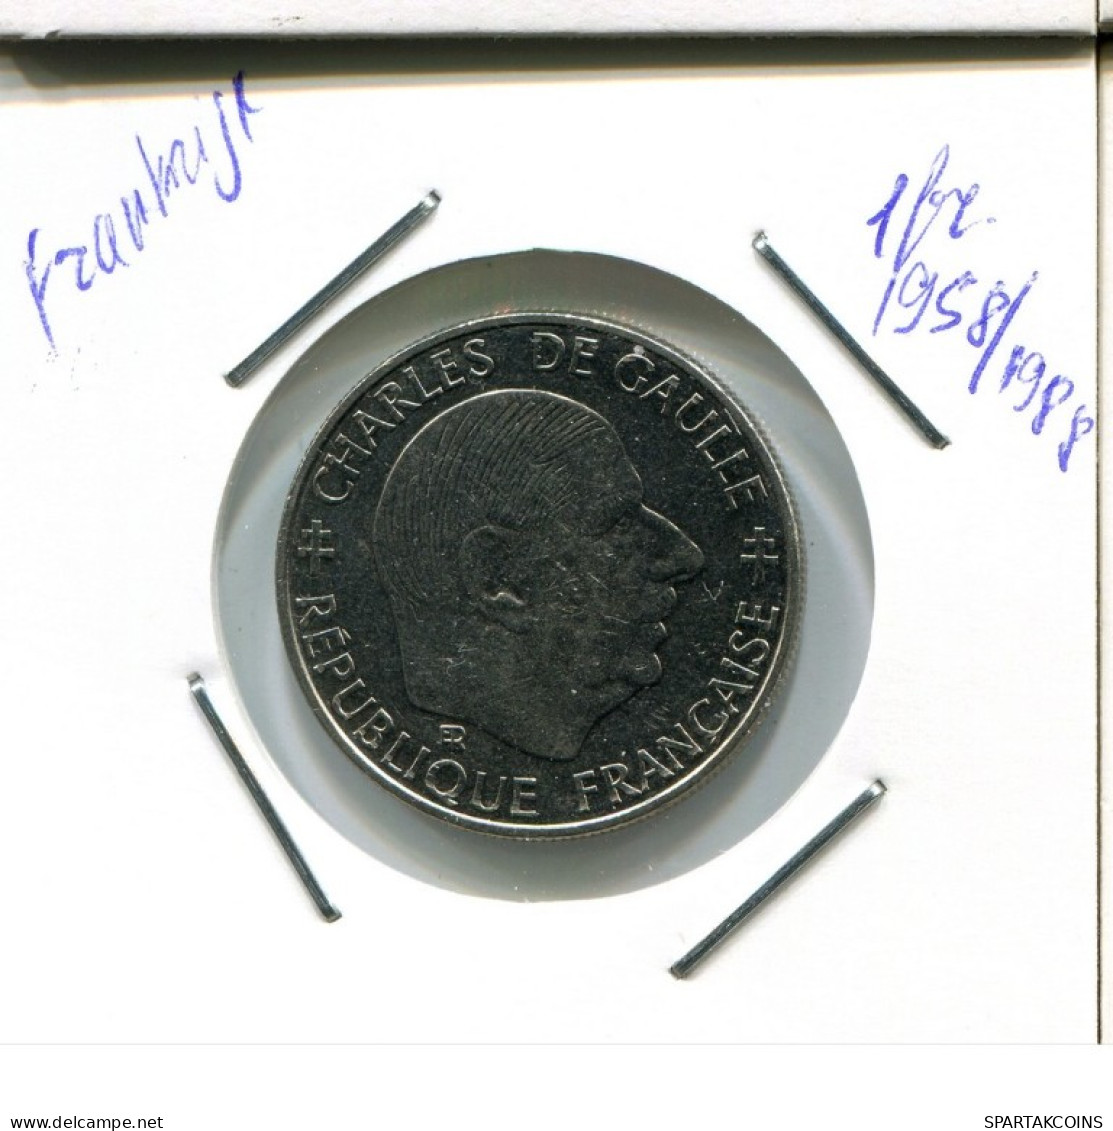 1 FRANC 1988 FRANCE Coin Coin CHARLES DE GAULLE #AN977.U.A - 1 Franc